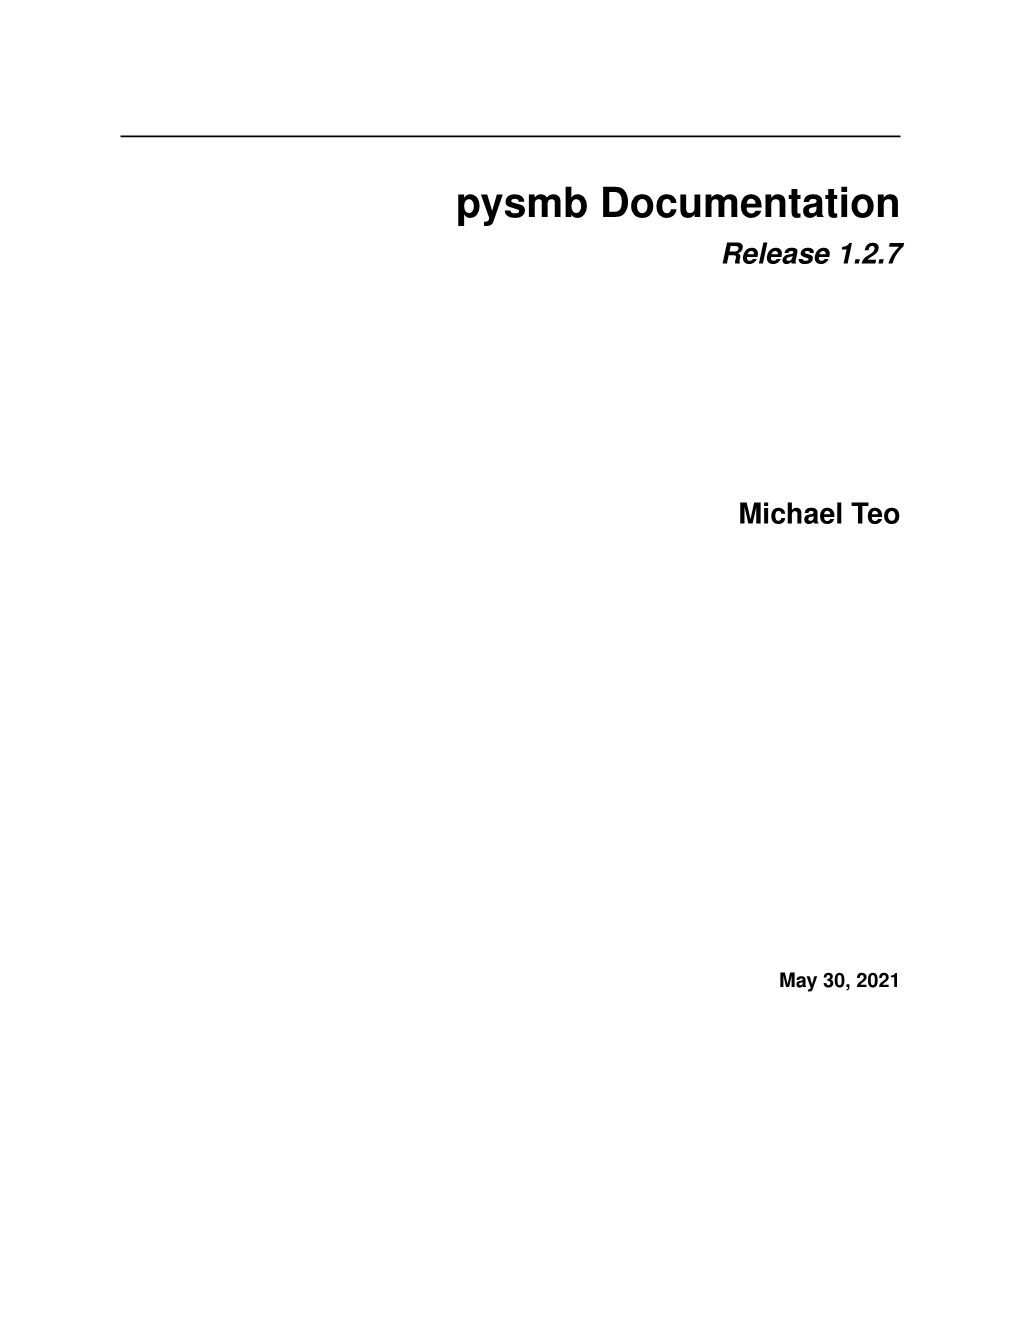 Pysmb Documentation Release 1.2.7